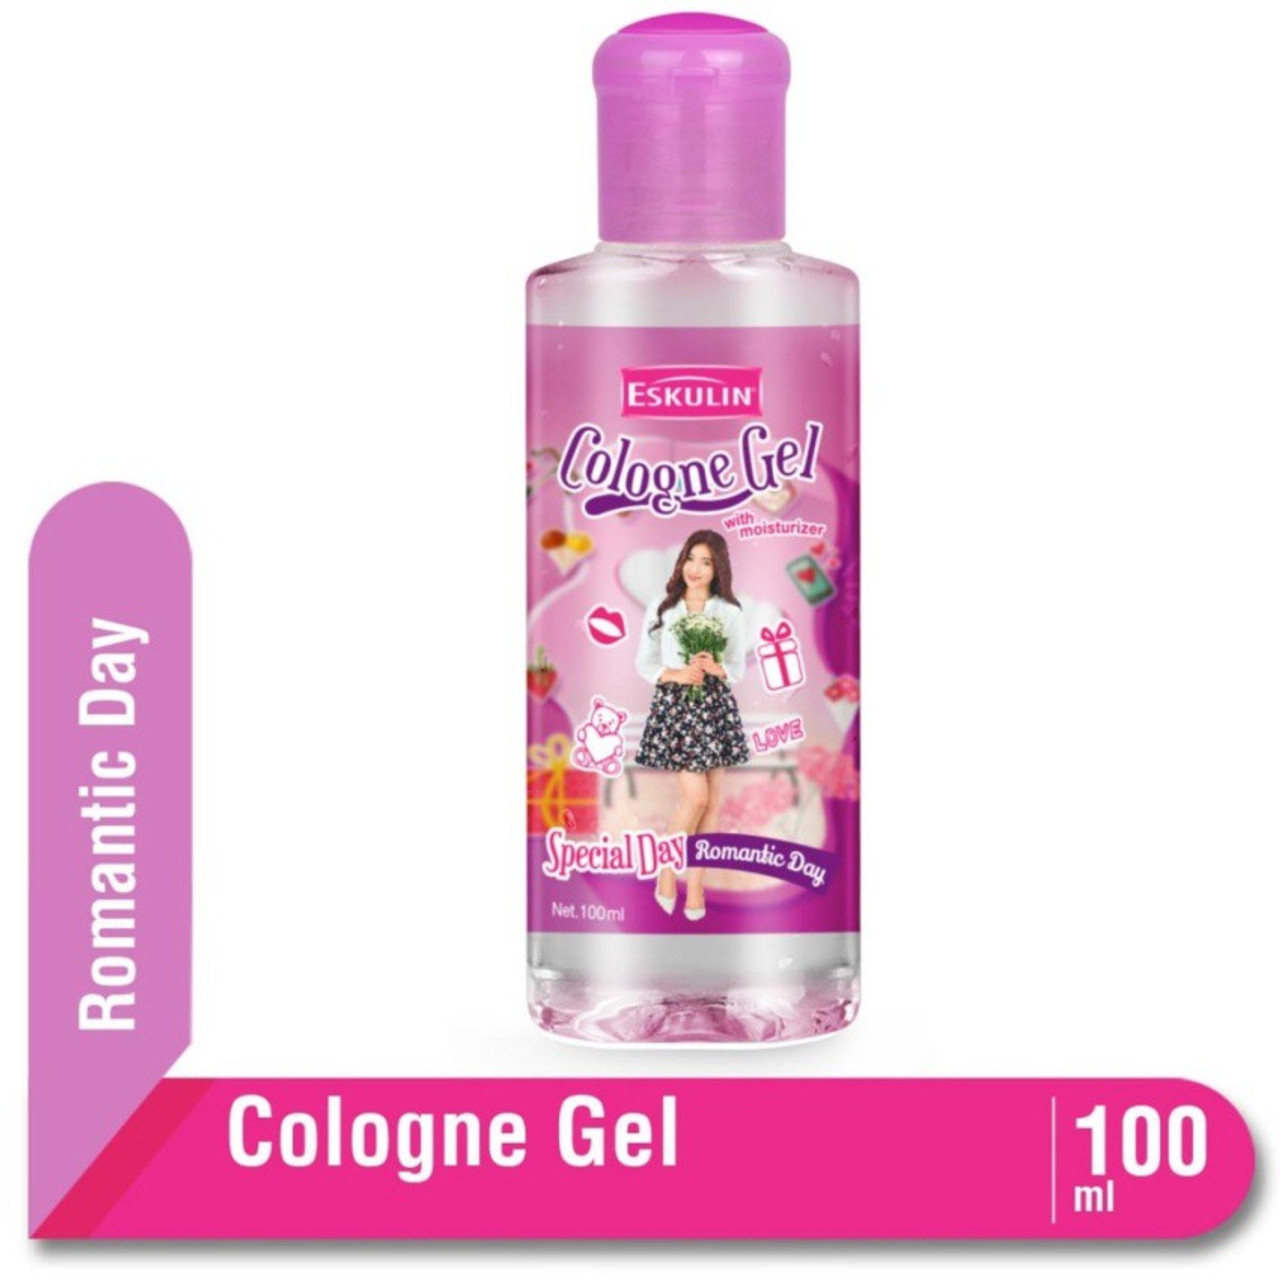 Eskulin Cologne Gel Romantic Day Bottle 100 ml